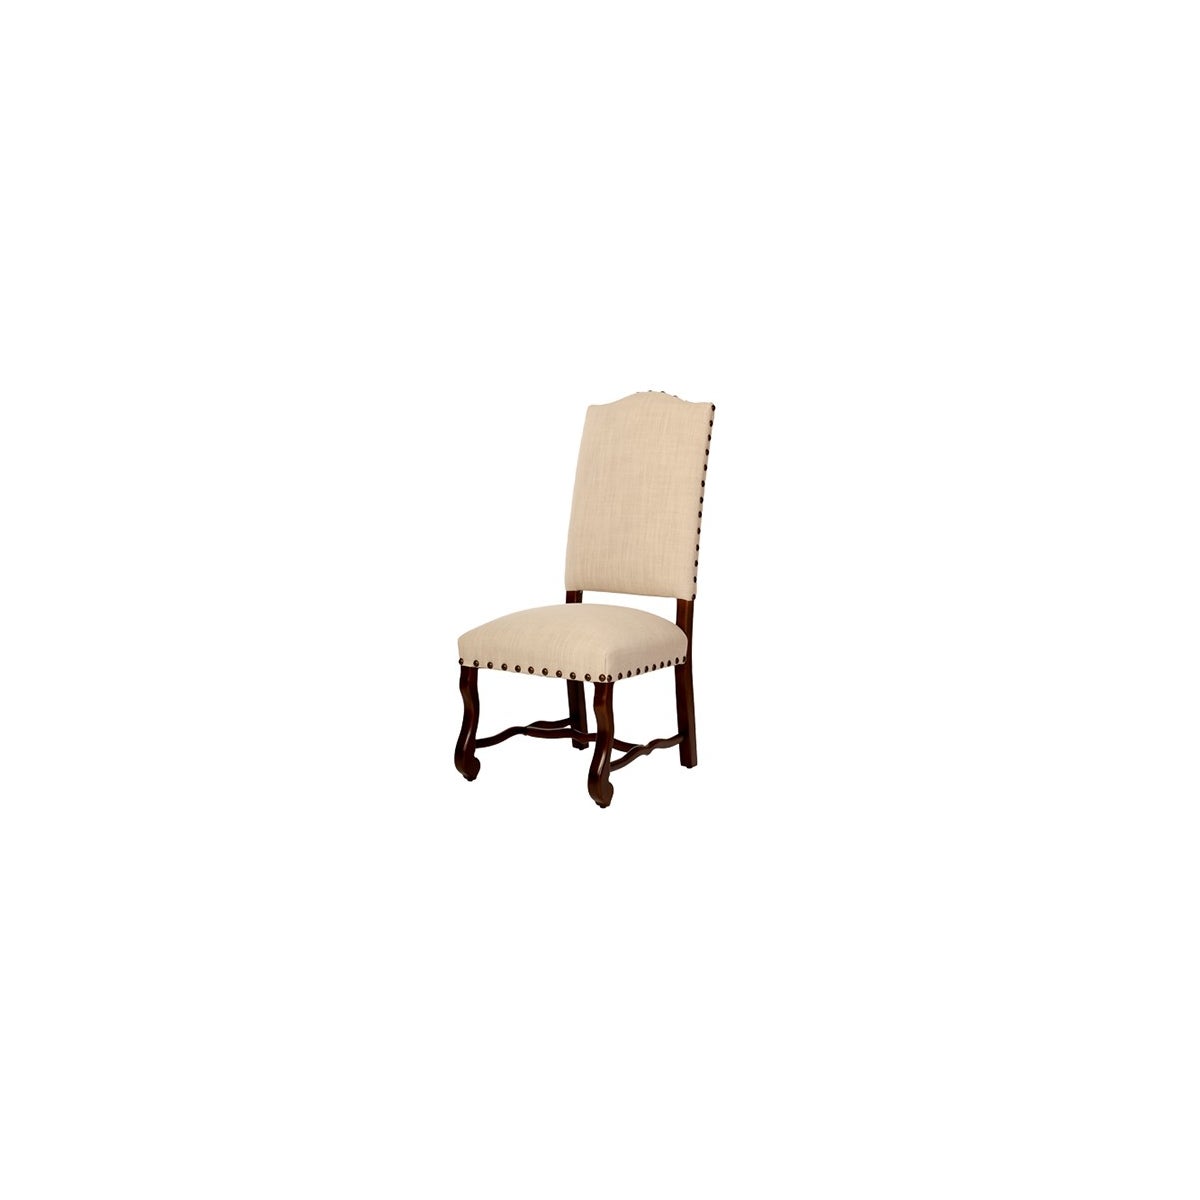 Emerson Side Chair